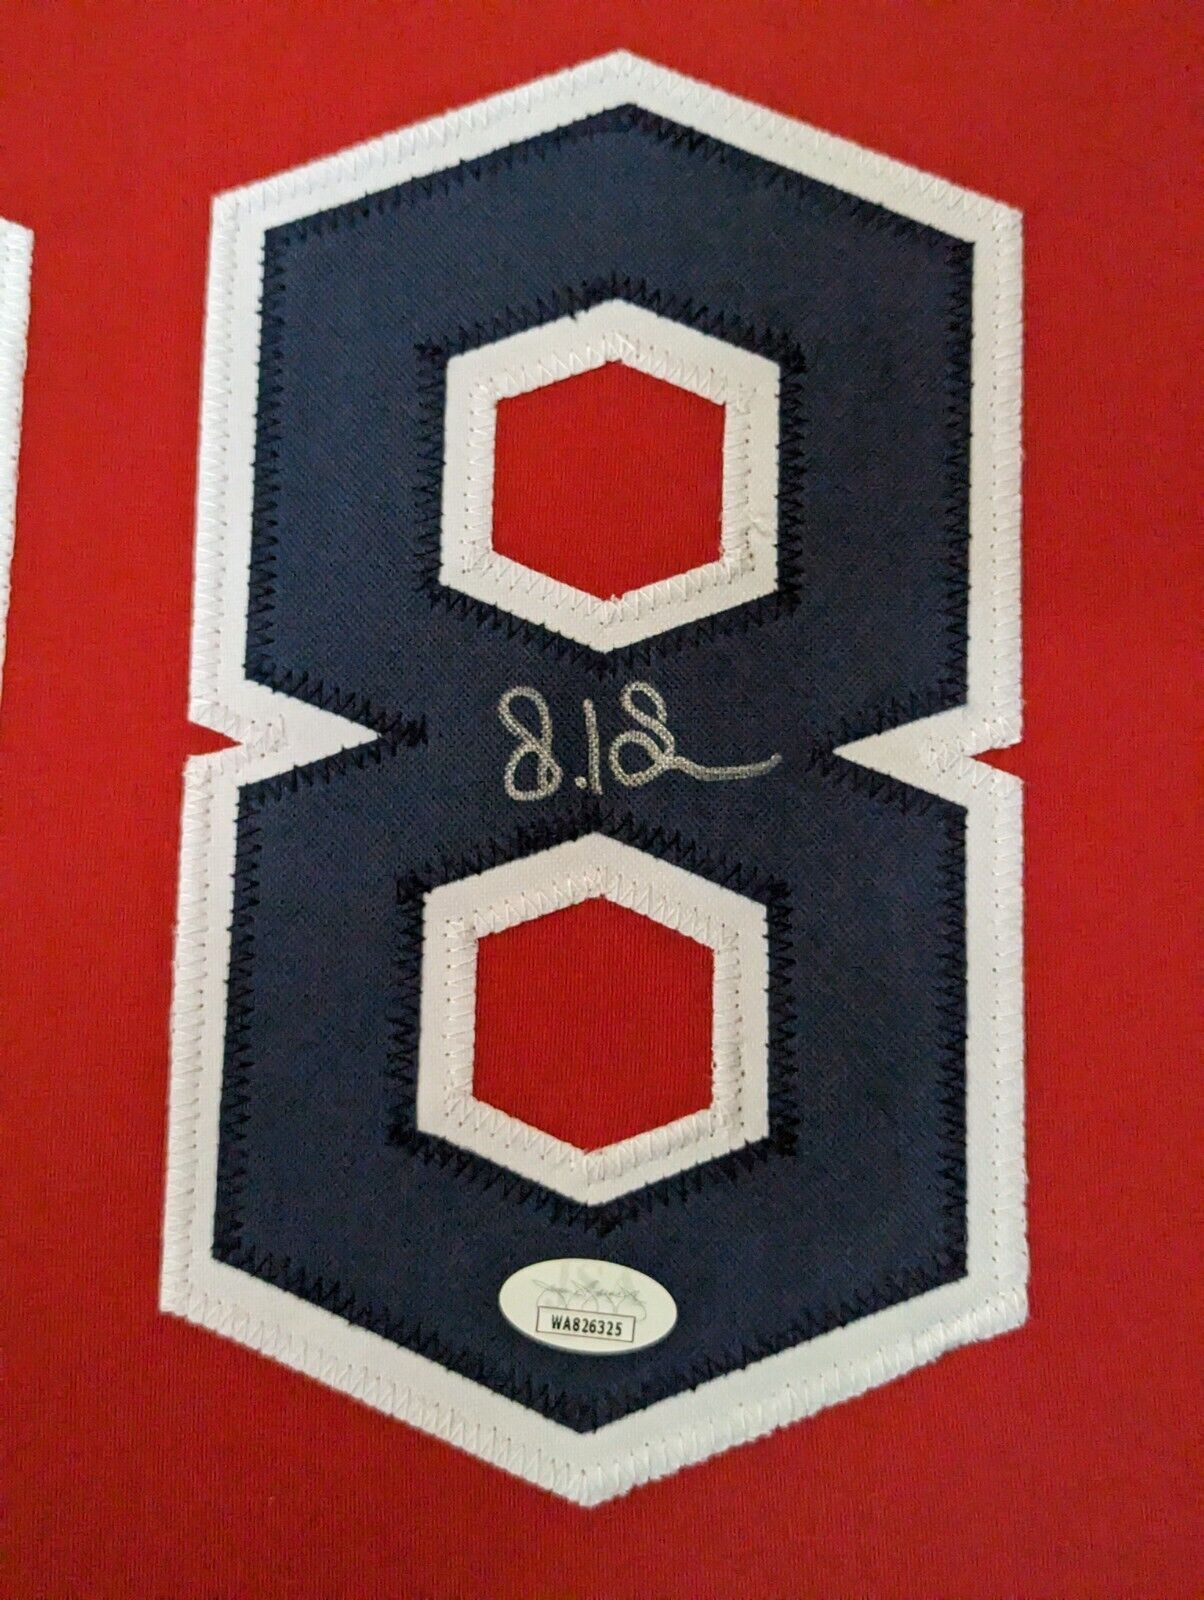 MVP Authentics Framed Cleveland Guardians Steven Kwan Autographed Signed Jersey Jsa Coa 585 sports jersey framing , jersey framing